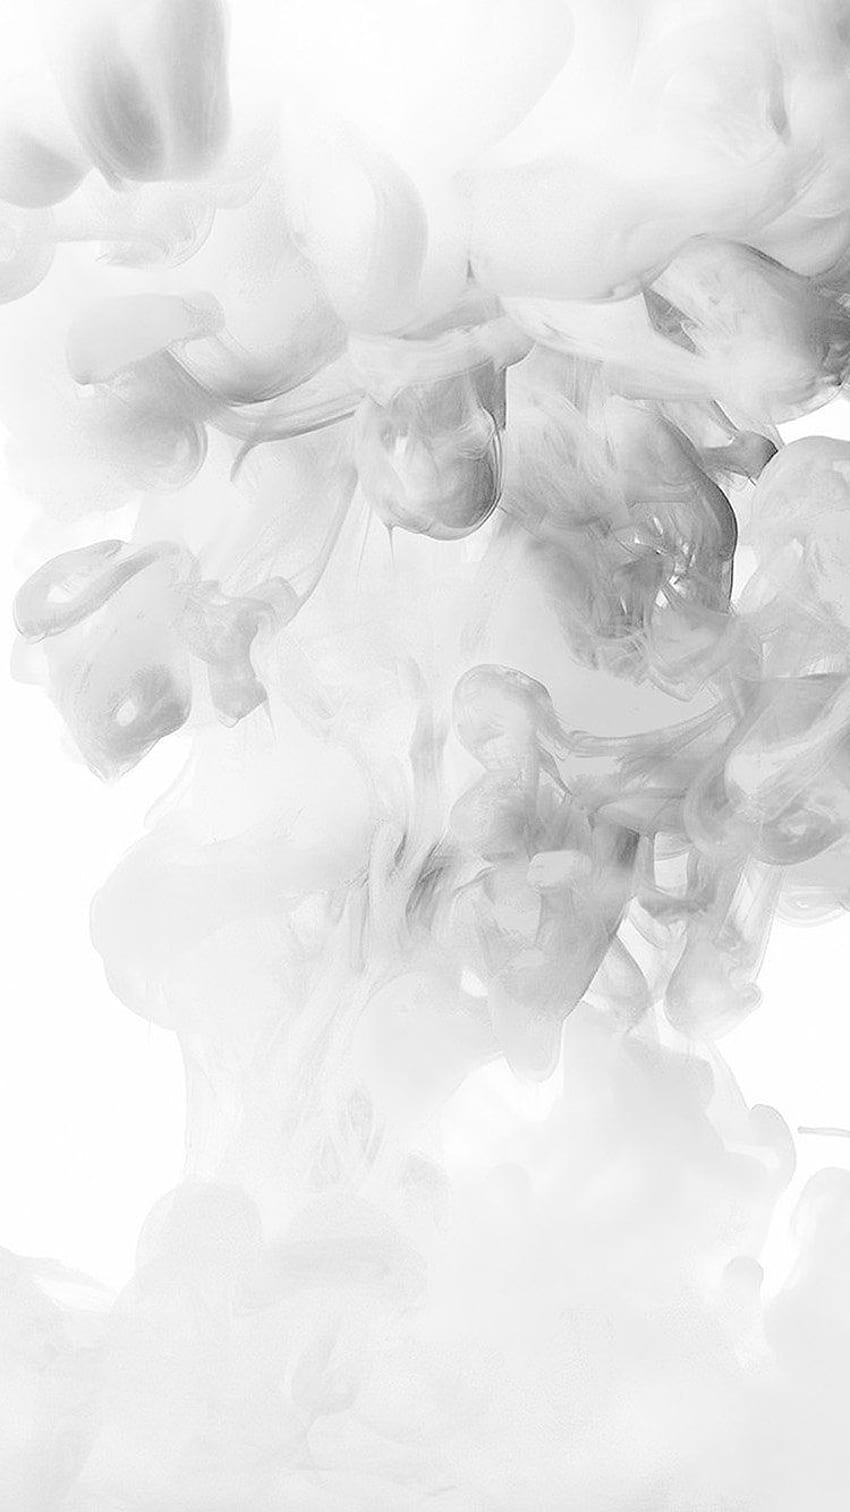 Smoke White Bw Abstract Fog Art Illust Art IPhone HD phone wallpaper